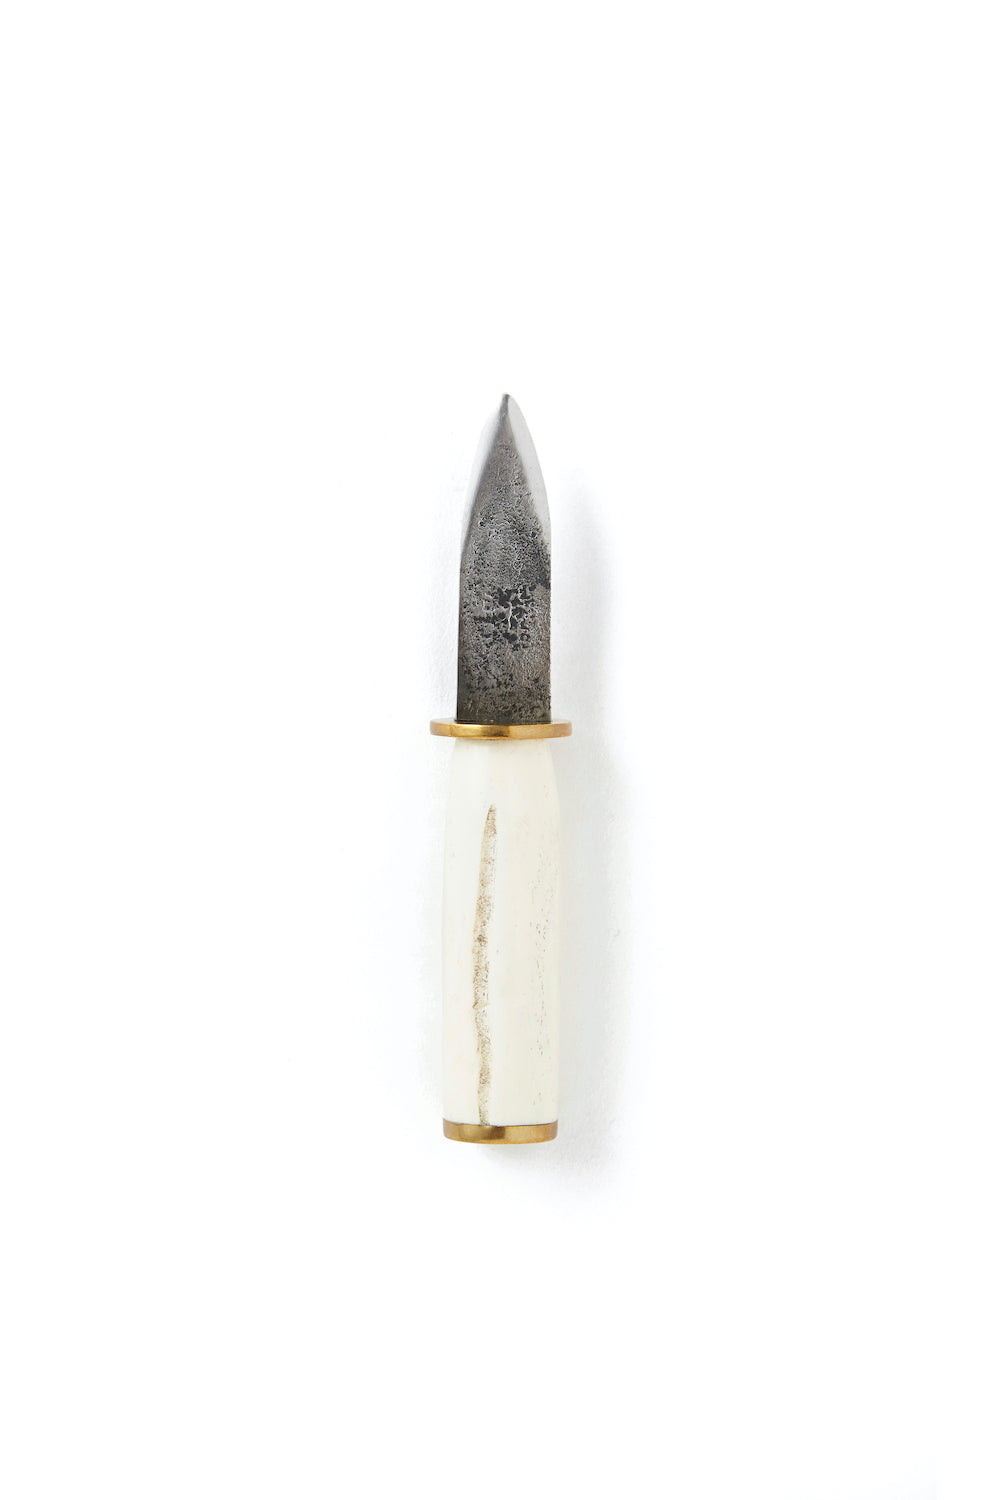 POGLIA - OYSTER KNIFE (BONE/BRASS)